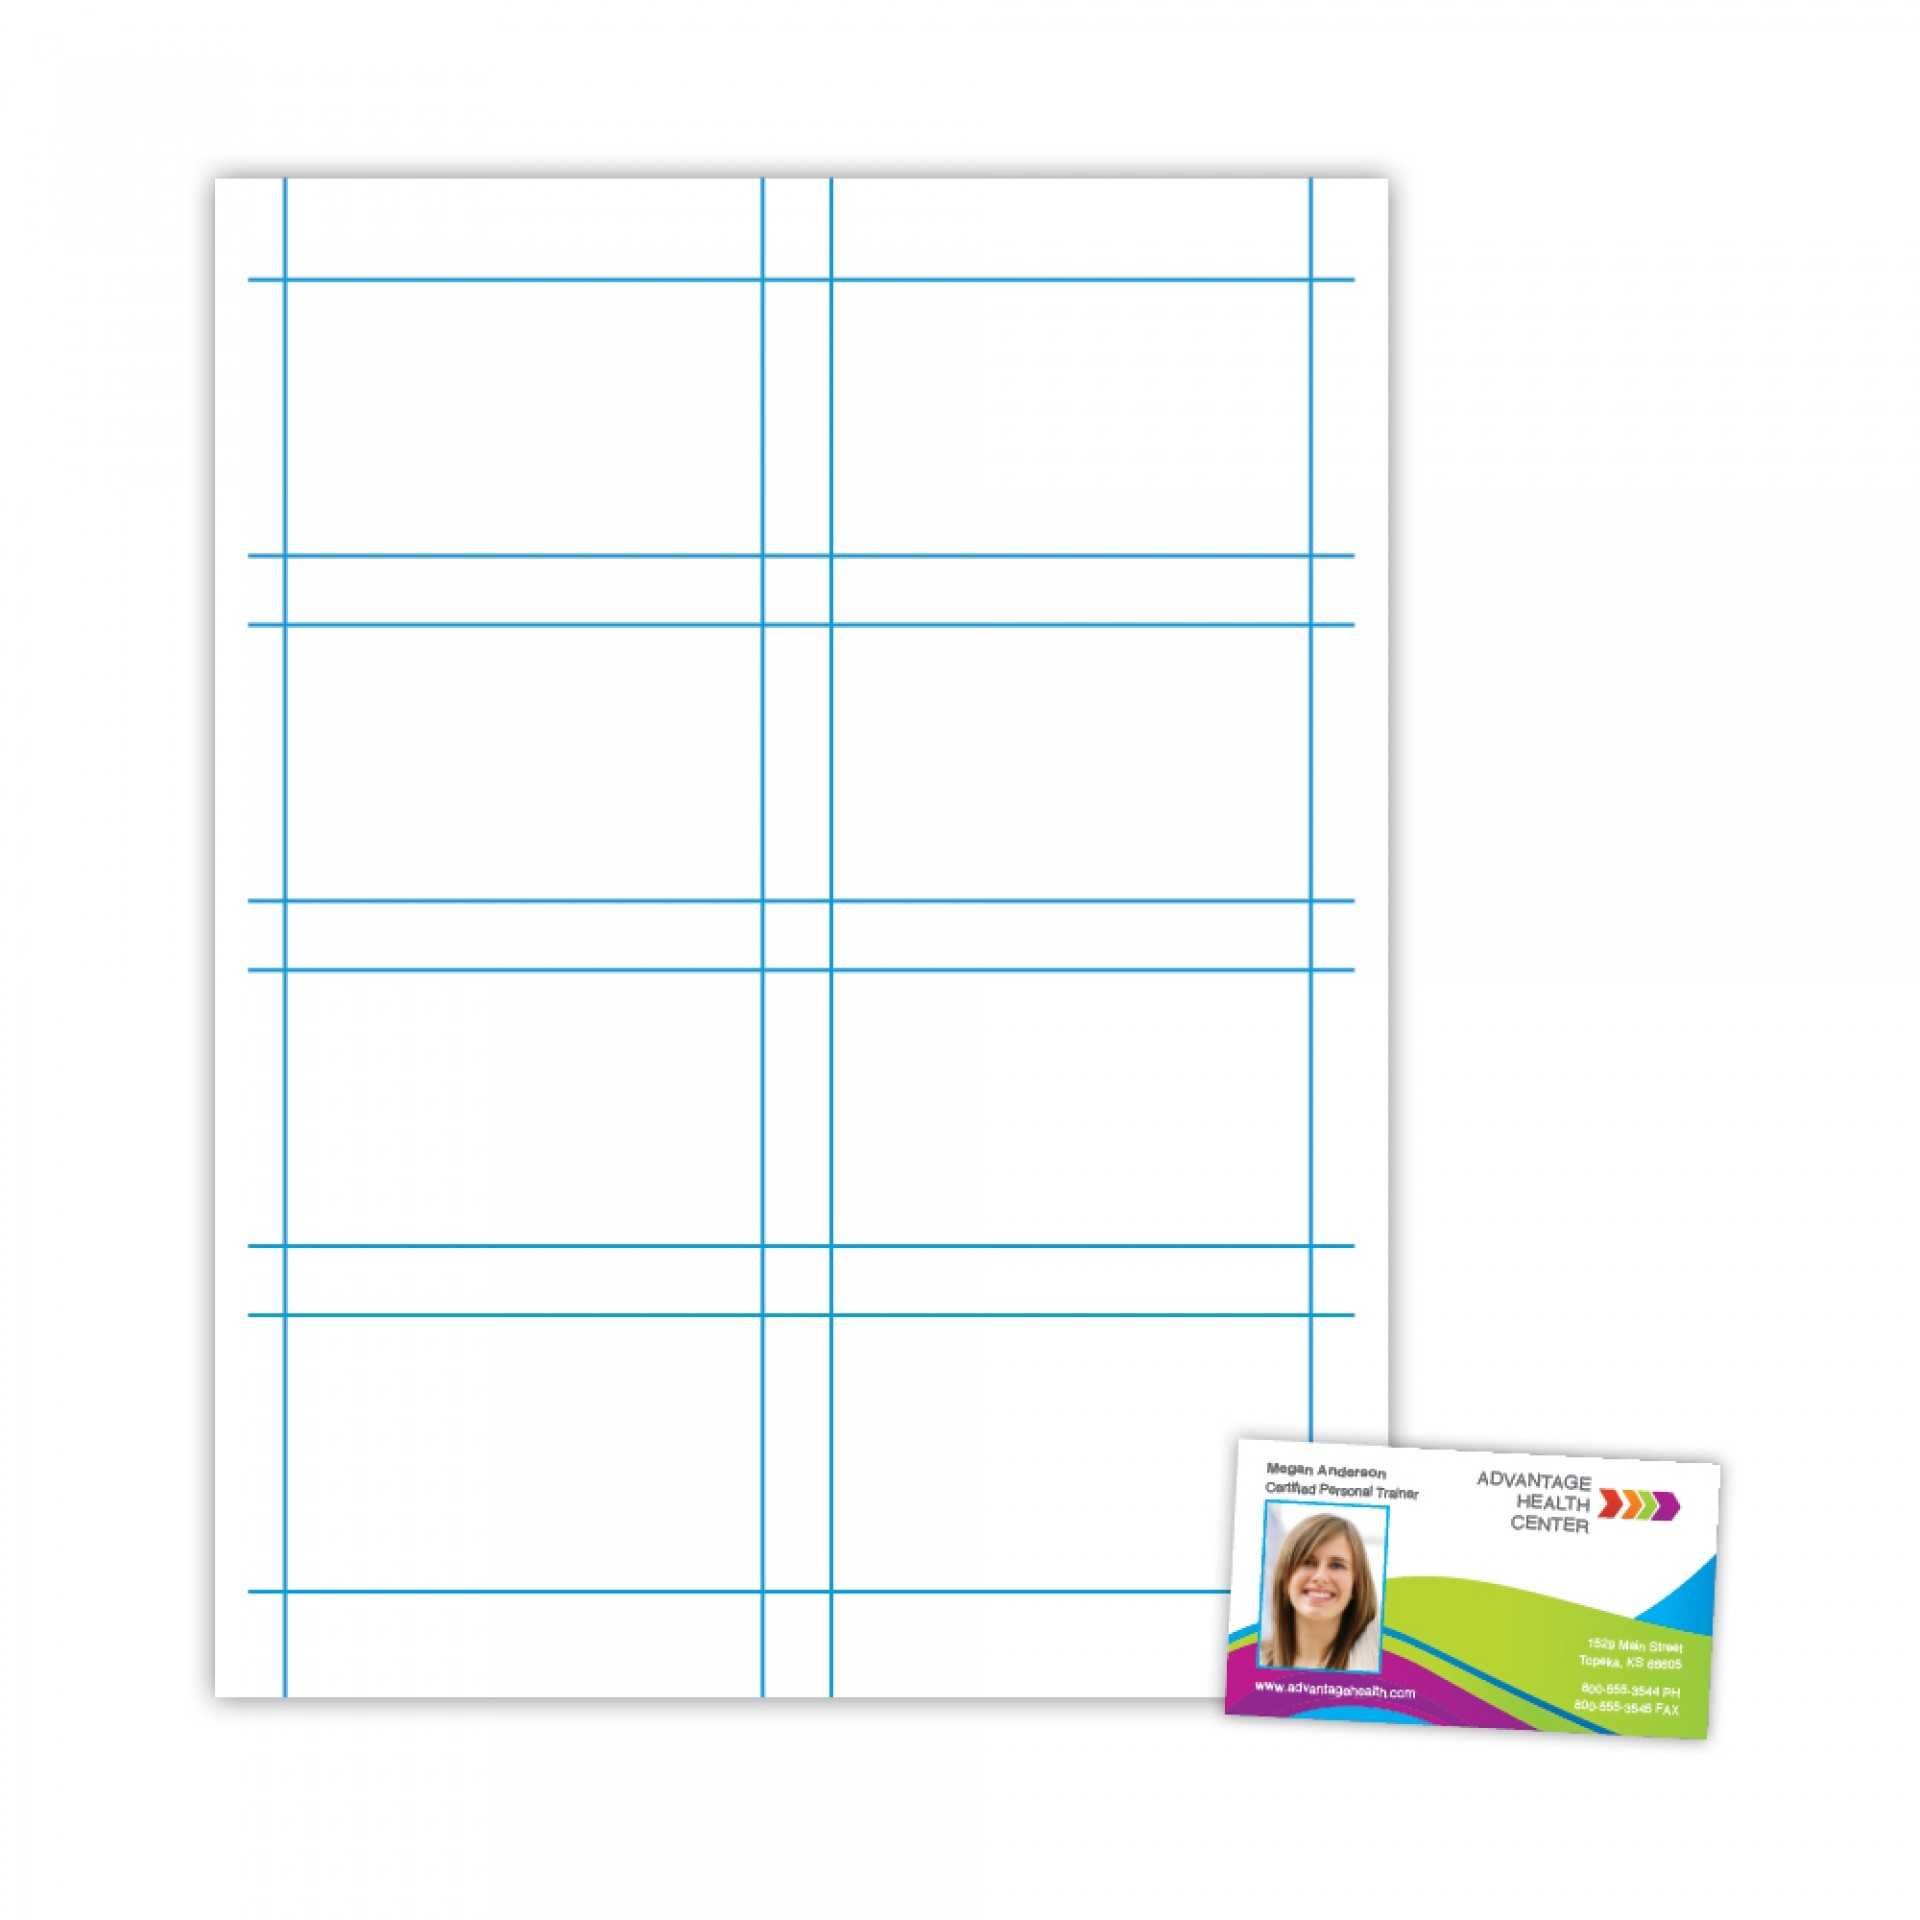 025 Plain Business Card Template Blank Microsoft Word Free Regarding Plain Business Card Template Microsoft Word